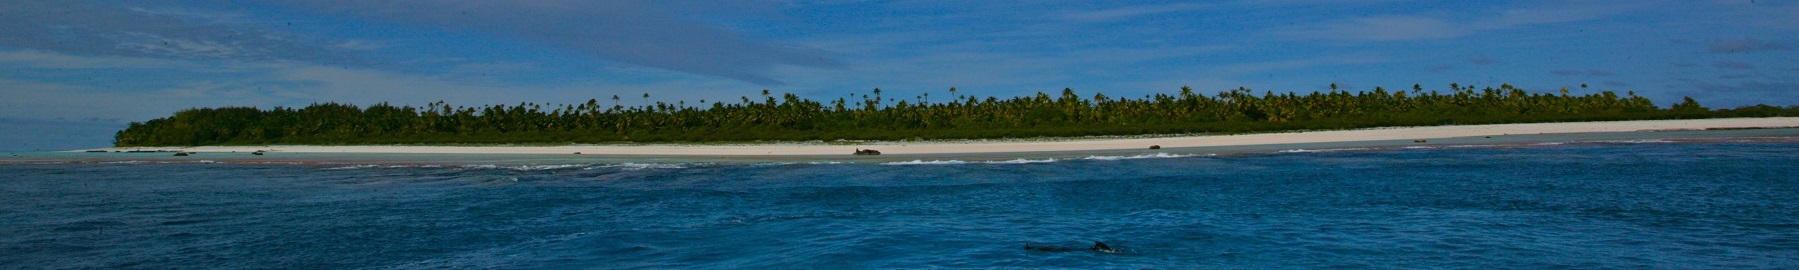 Marae Moana - Cook Islands Marine Park